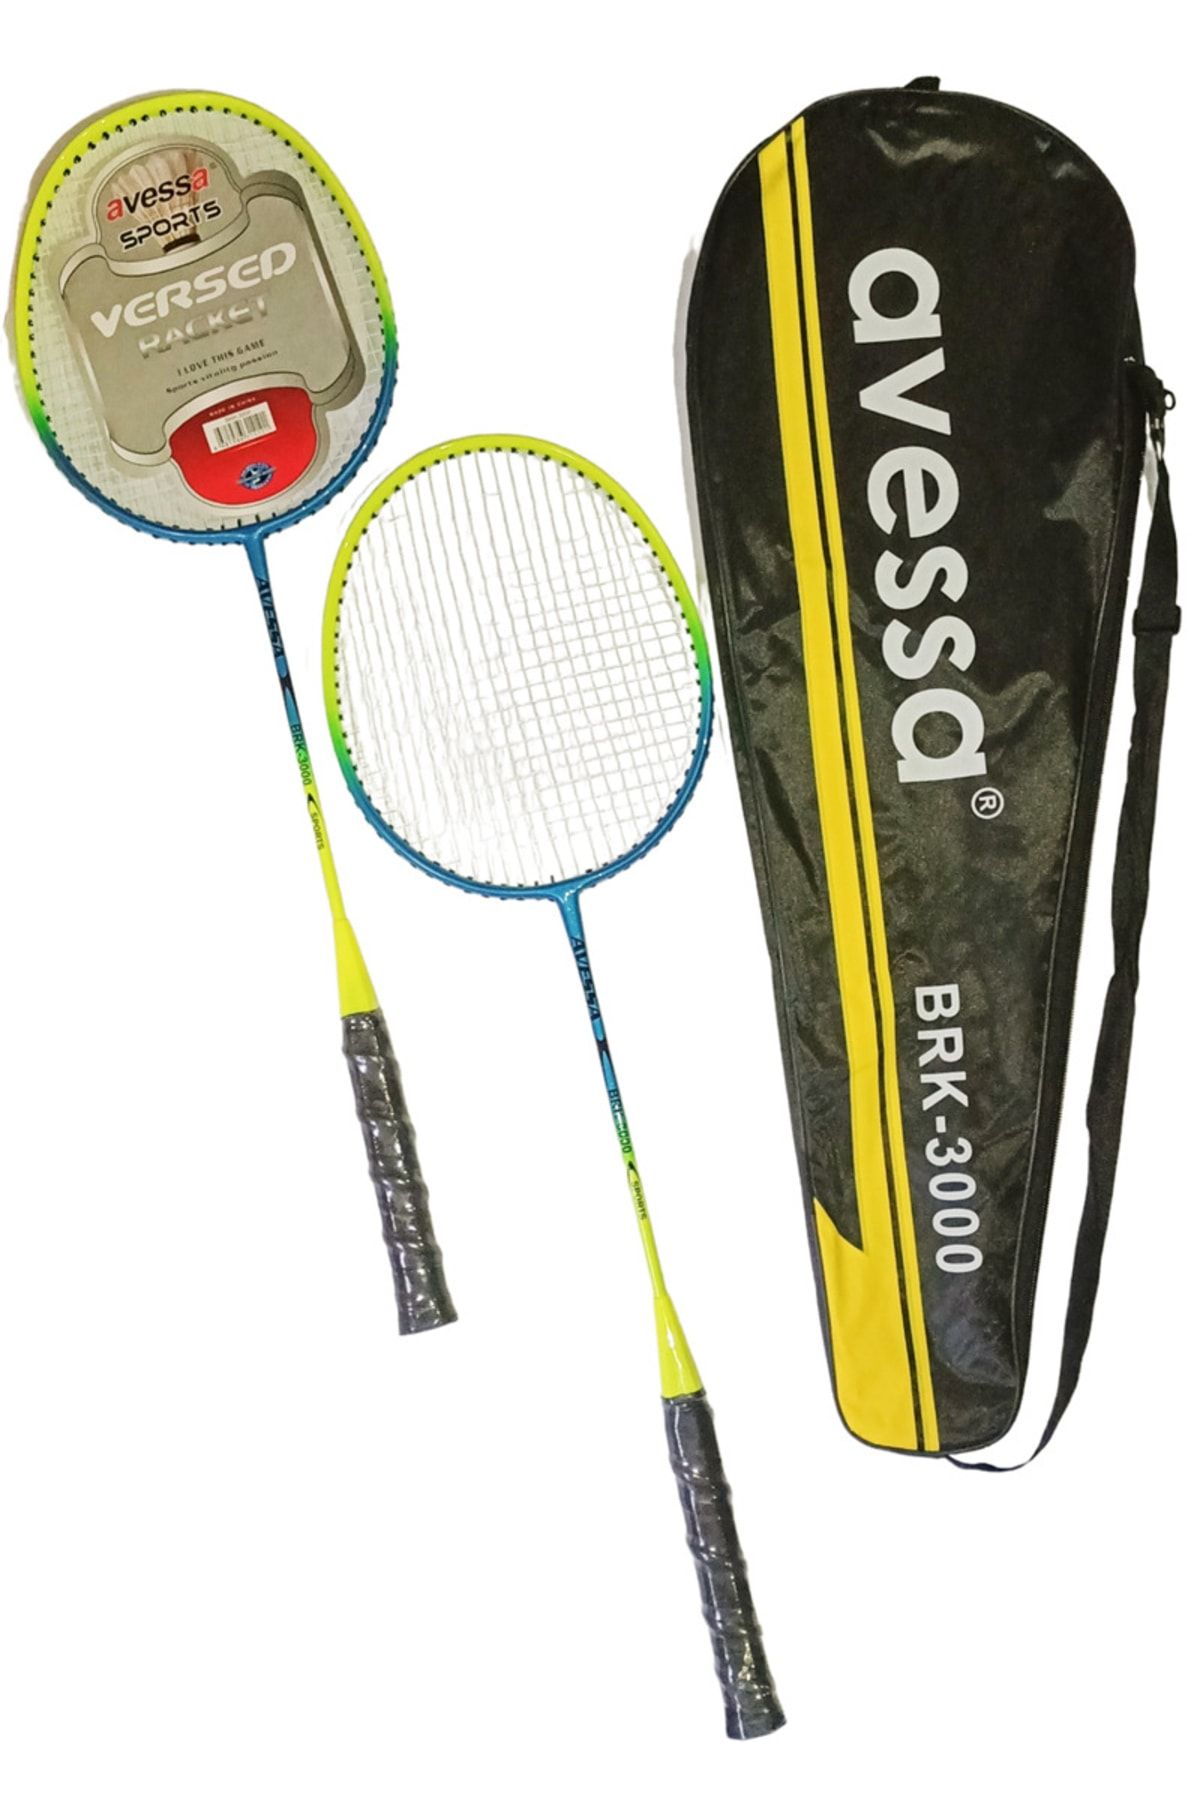 Avessa Brk-3000 Badminton Raketi